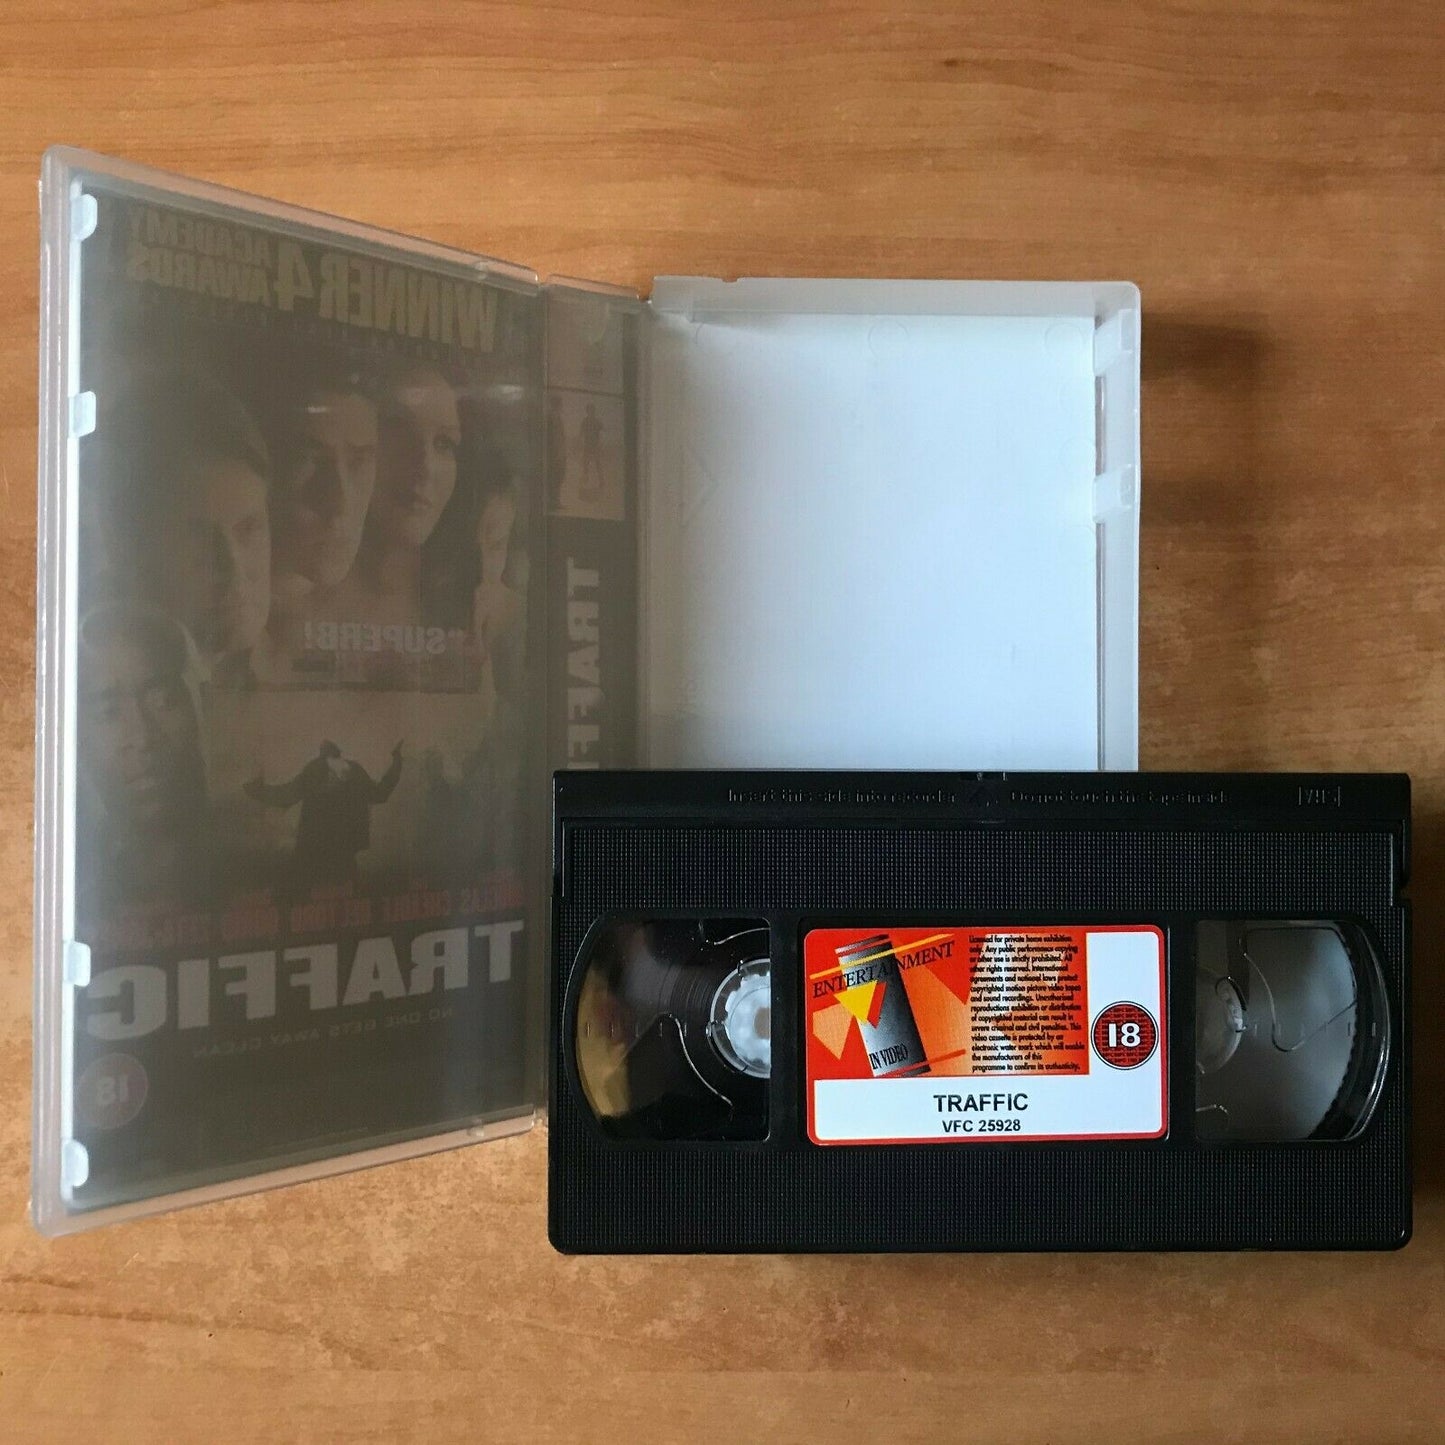 Traffic: Crime Drama - Thriller - Michael Douglas / Catherine Zeta-Jones - VHS-